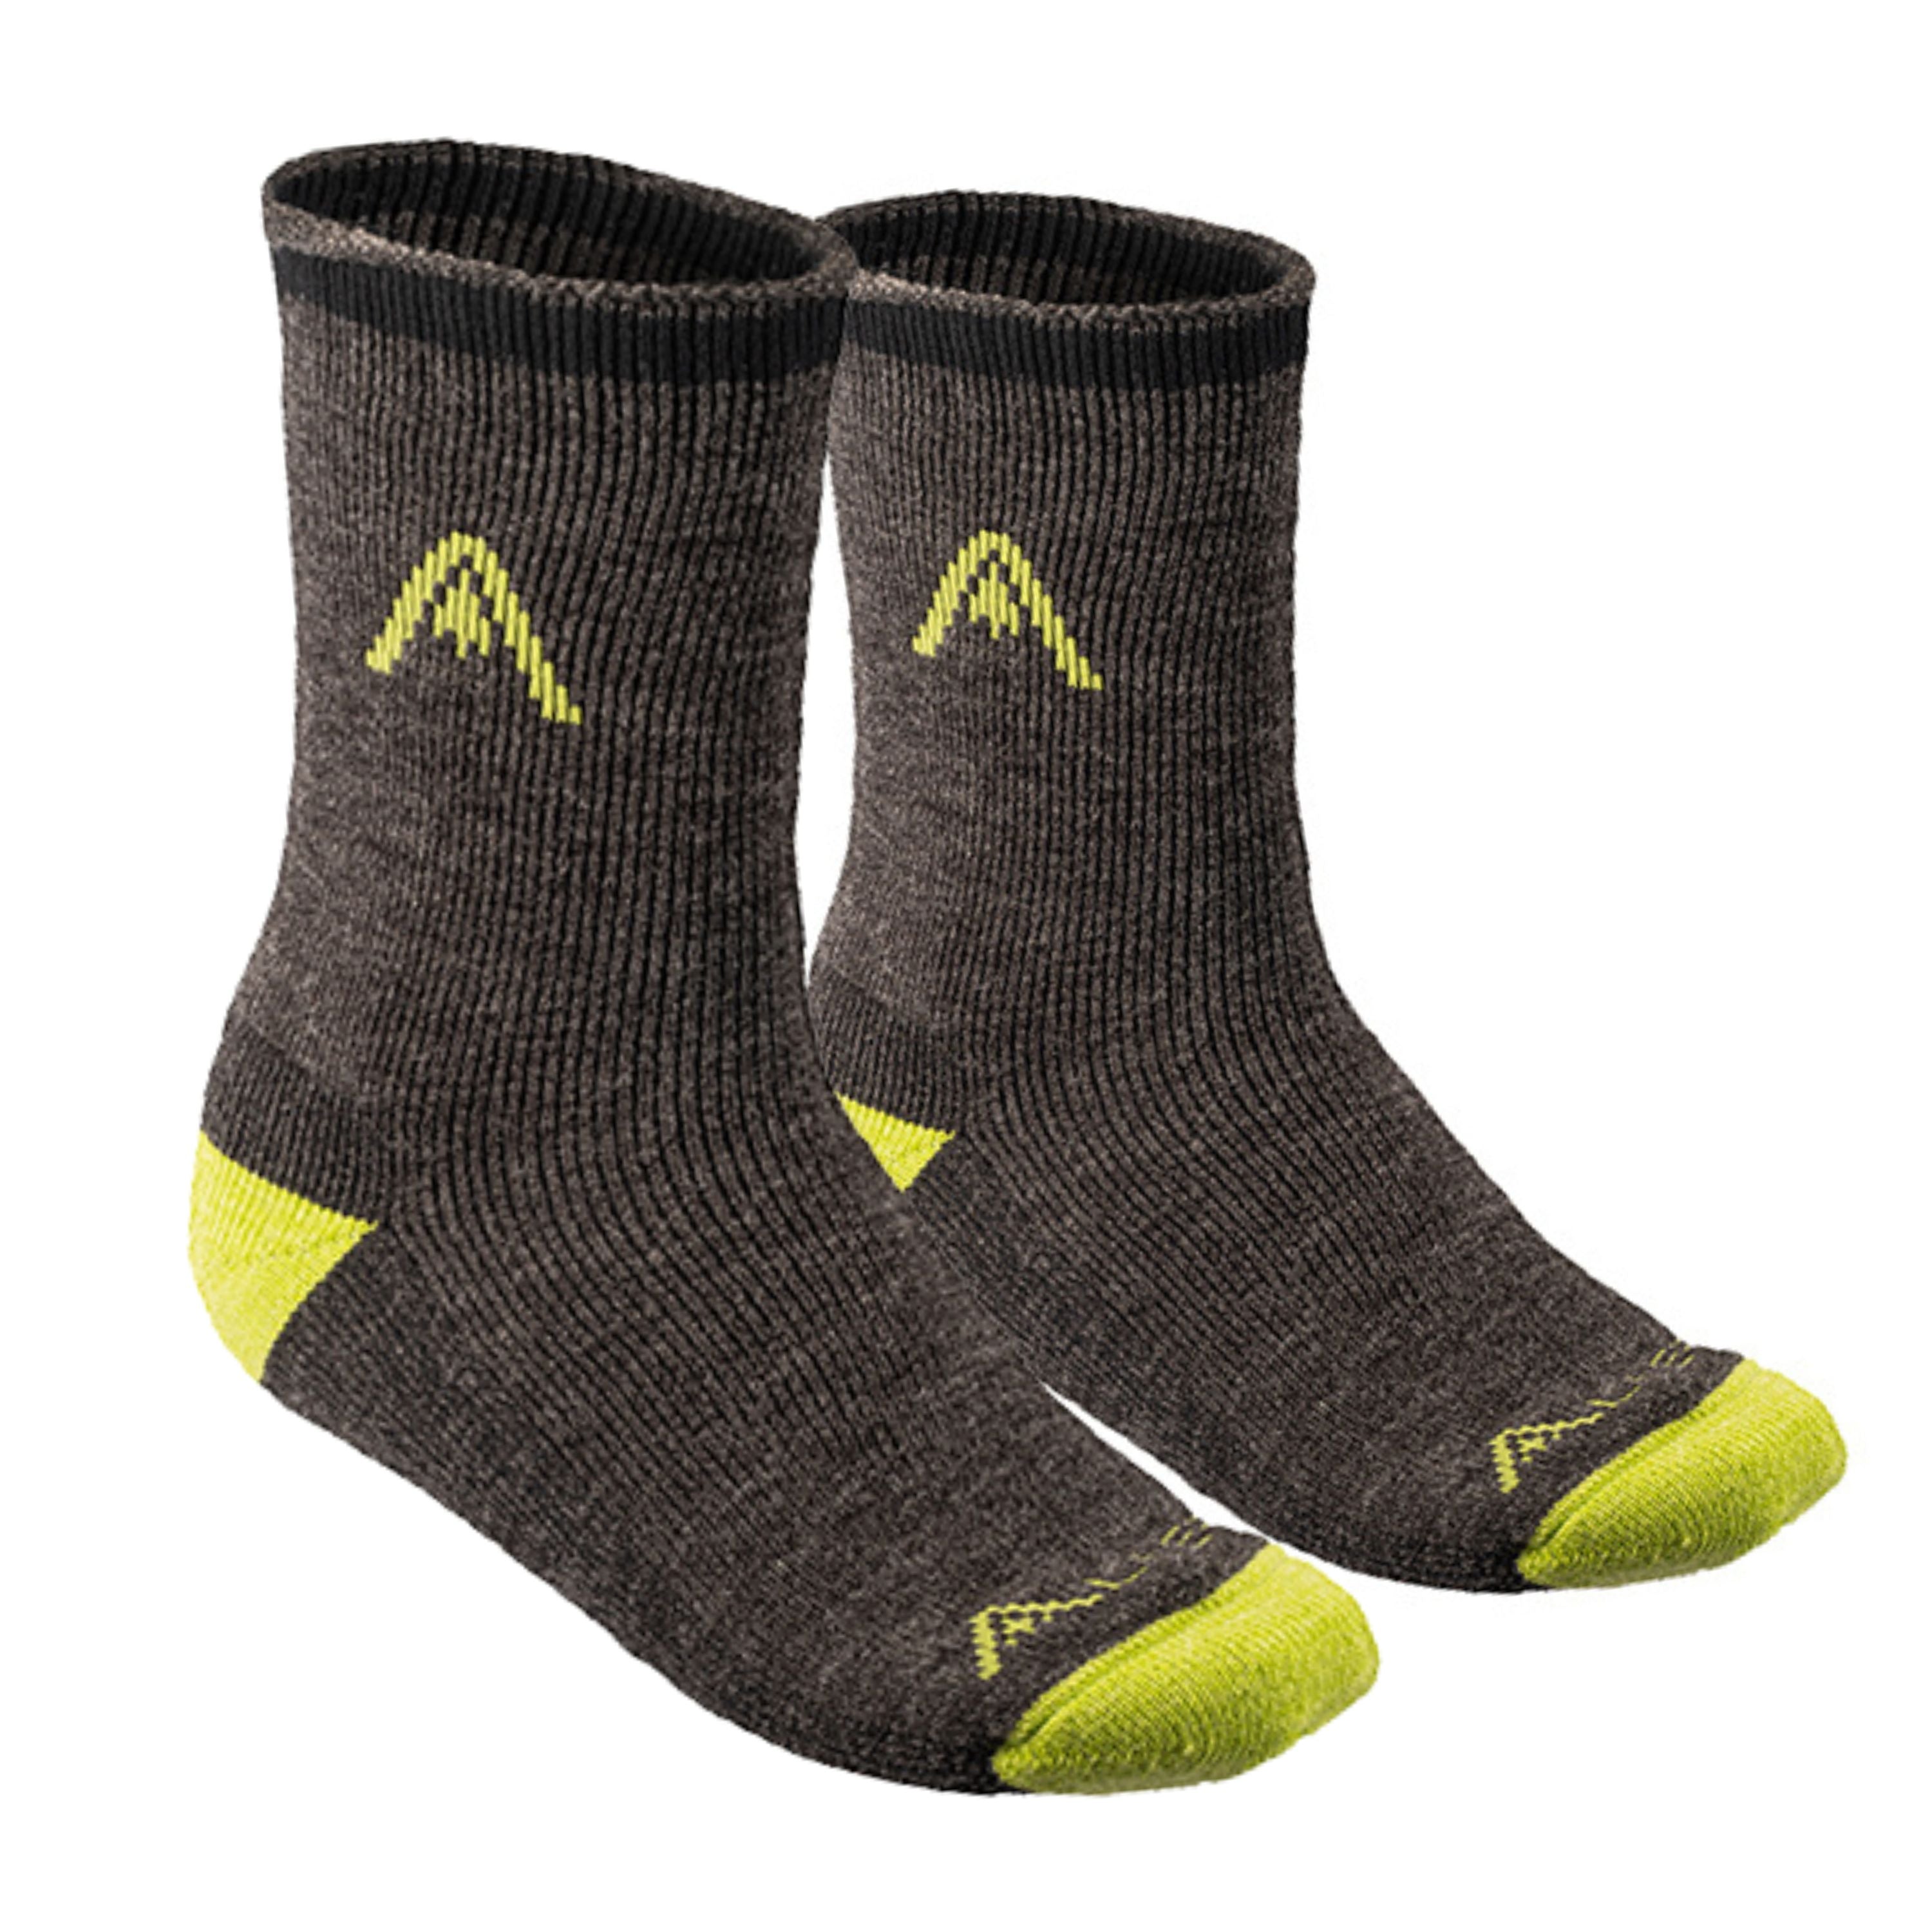 "Zermatt" socks - Men's